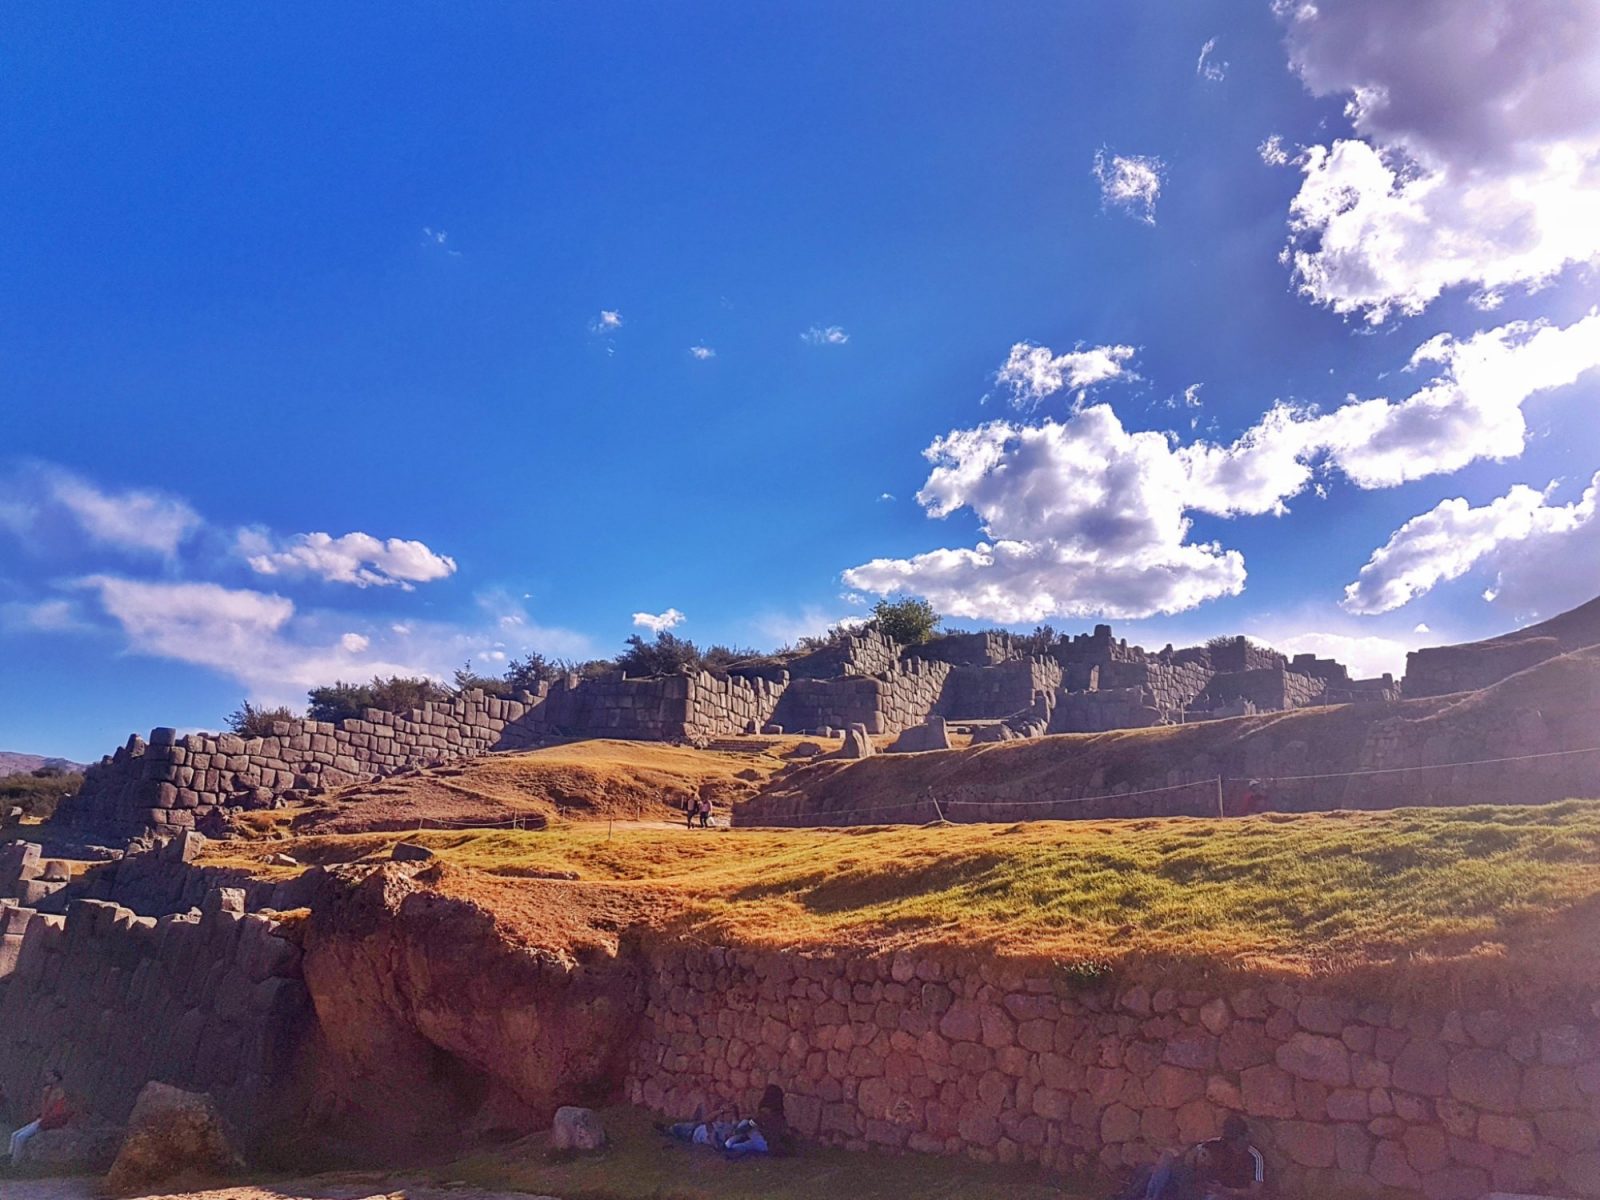 <img src="images/" width="800" height="600" alt="inca ruins - wp image 1335109644 - Peru: Visit The Inca Ruins Near Cusco City for €2 ">